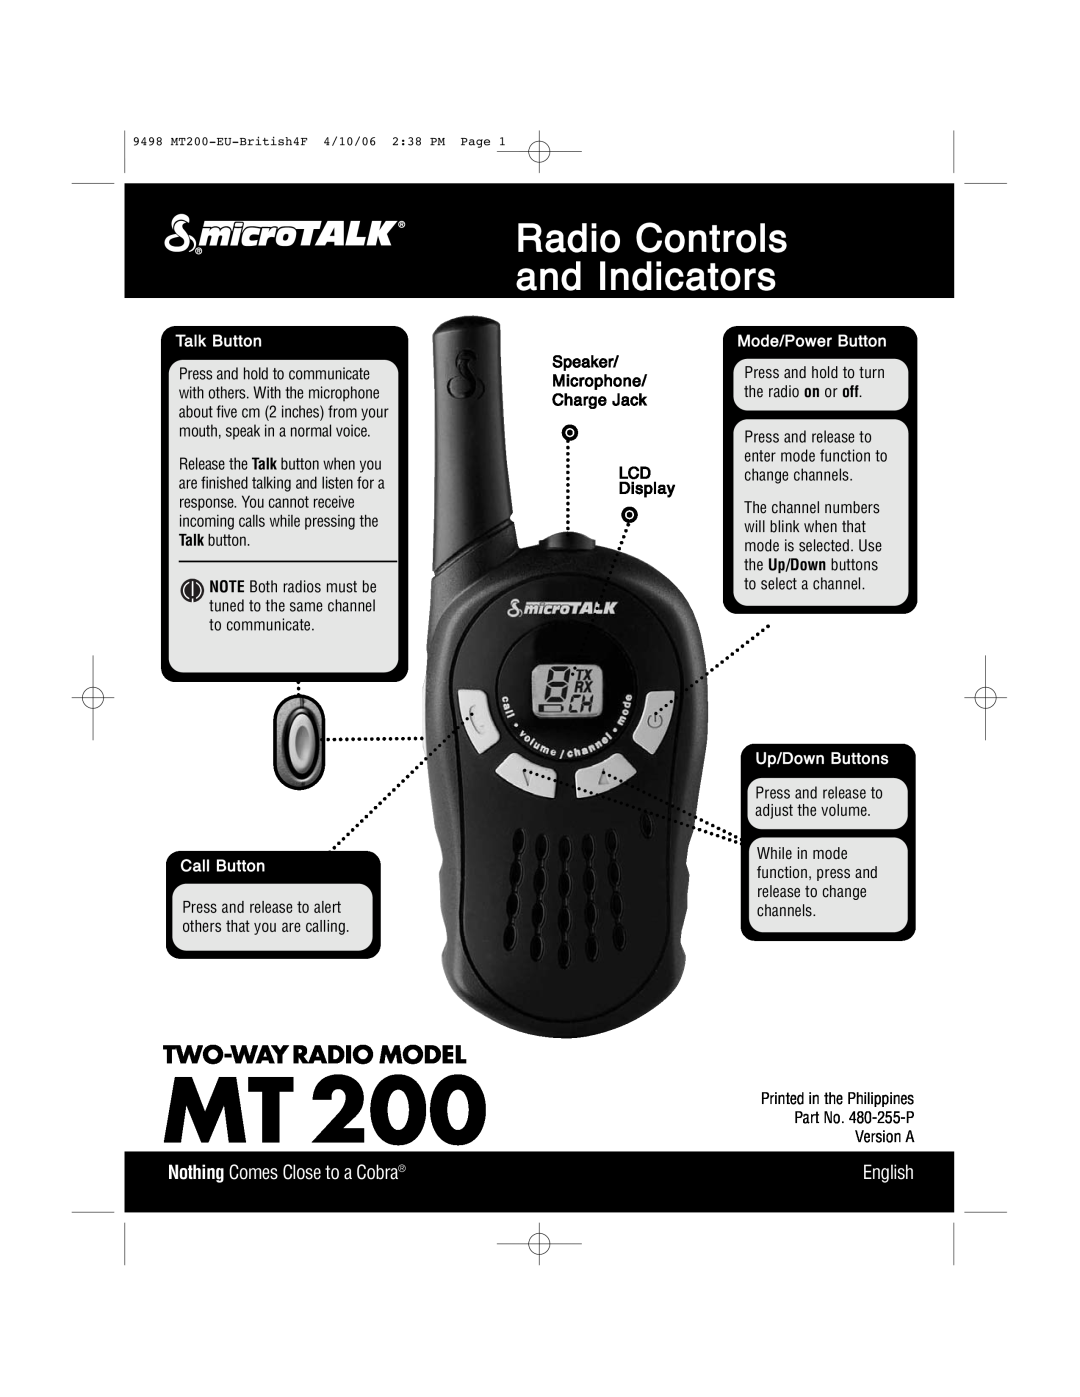 Cobra Electronics MT 200 manual Radio Controls and Indicators, Talk Button, Call Button, Mode/Power Button, English 